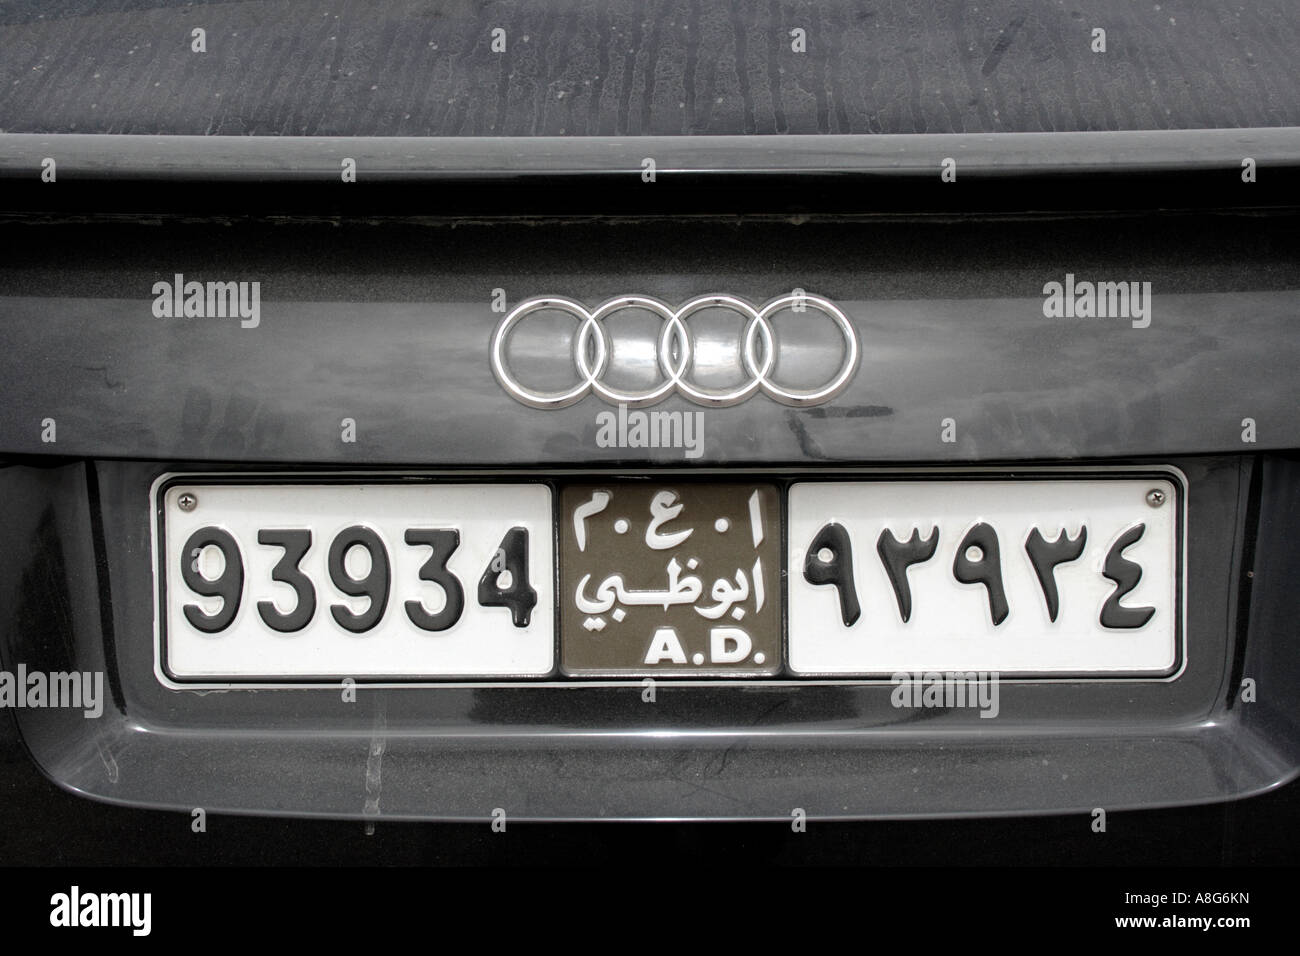 Audi car license plate, Abu Dhabi, United Arab Emirates. Photo by Willy Matheisl Stock Photo